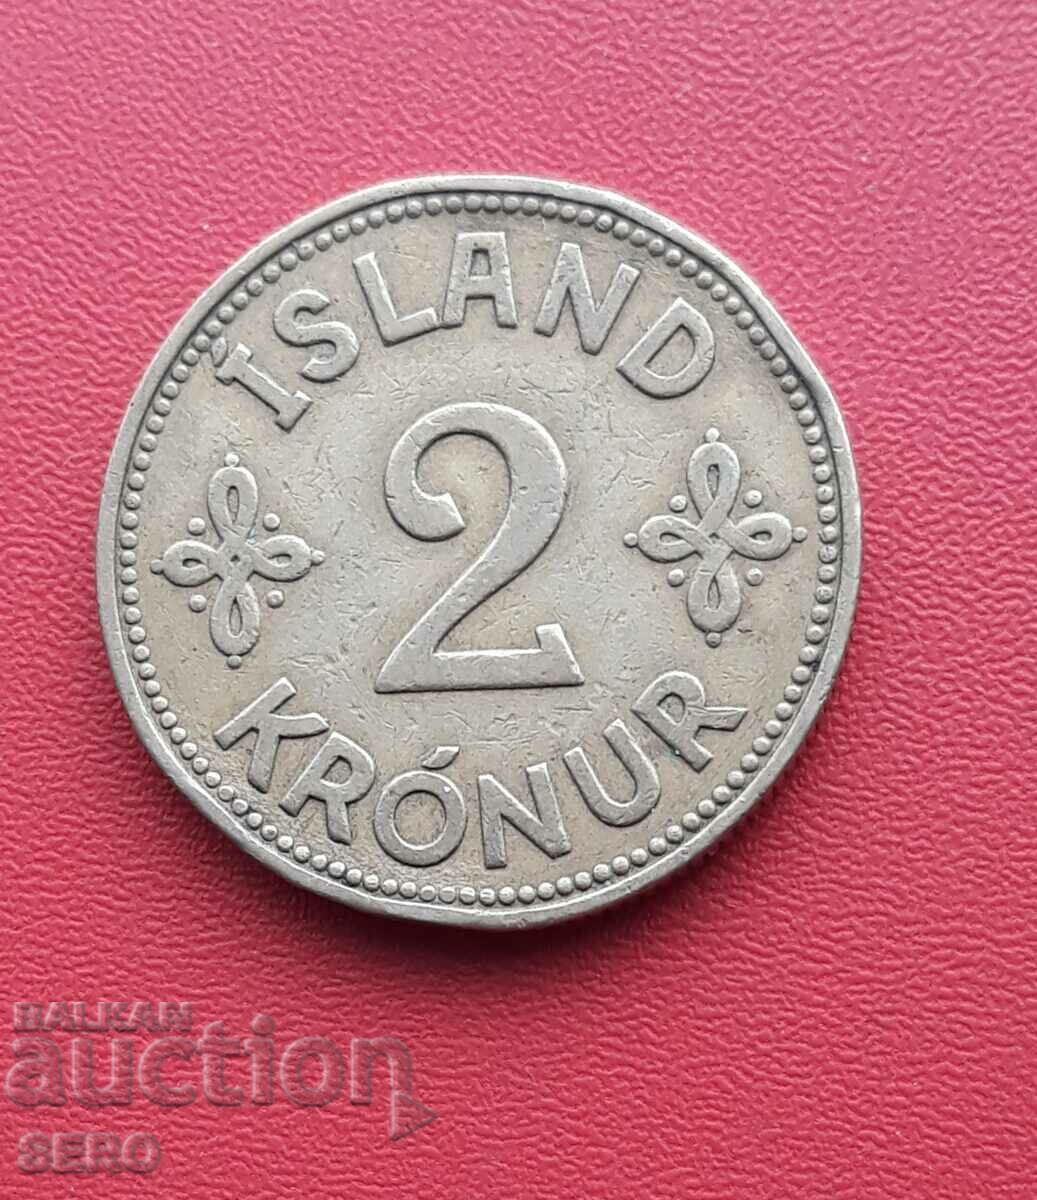 Iceland-2 kroner 1940-rare-struck on ring